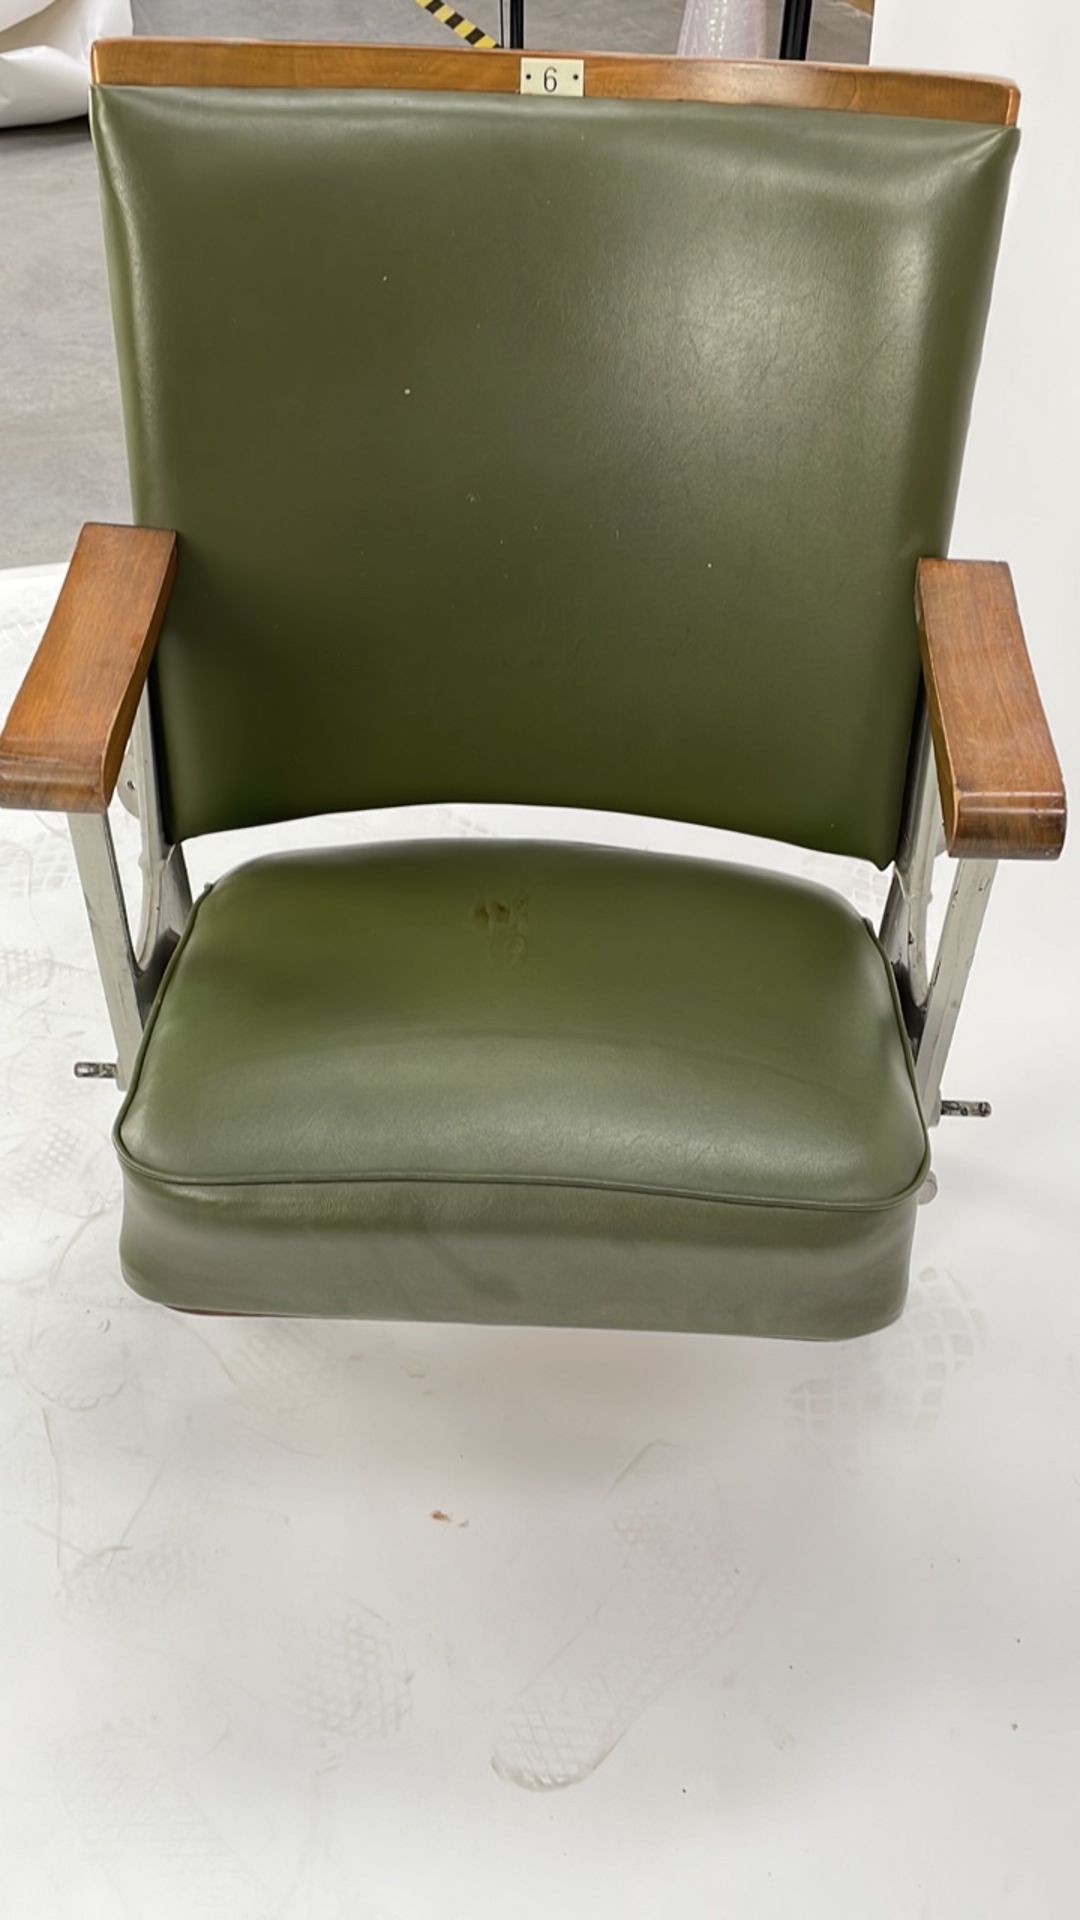 Vintage Cinema seating - Image 2 of 3